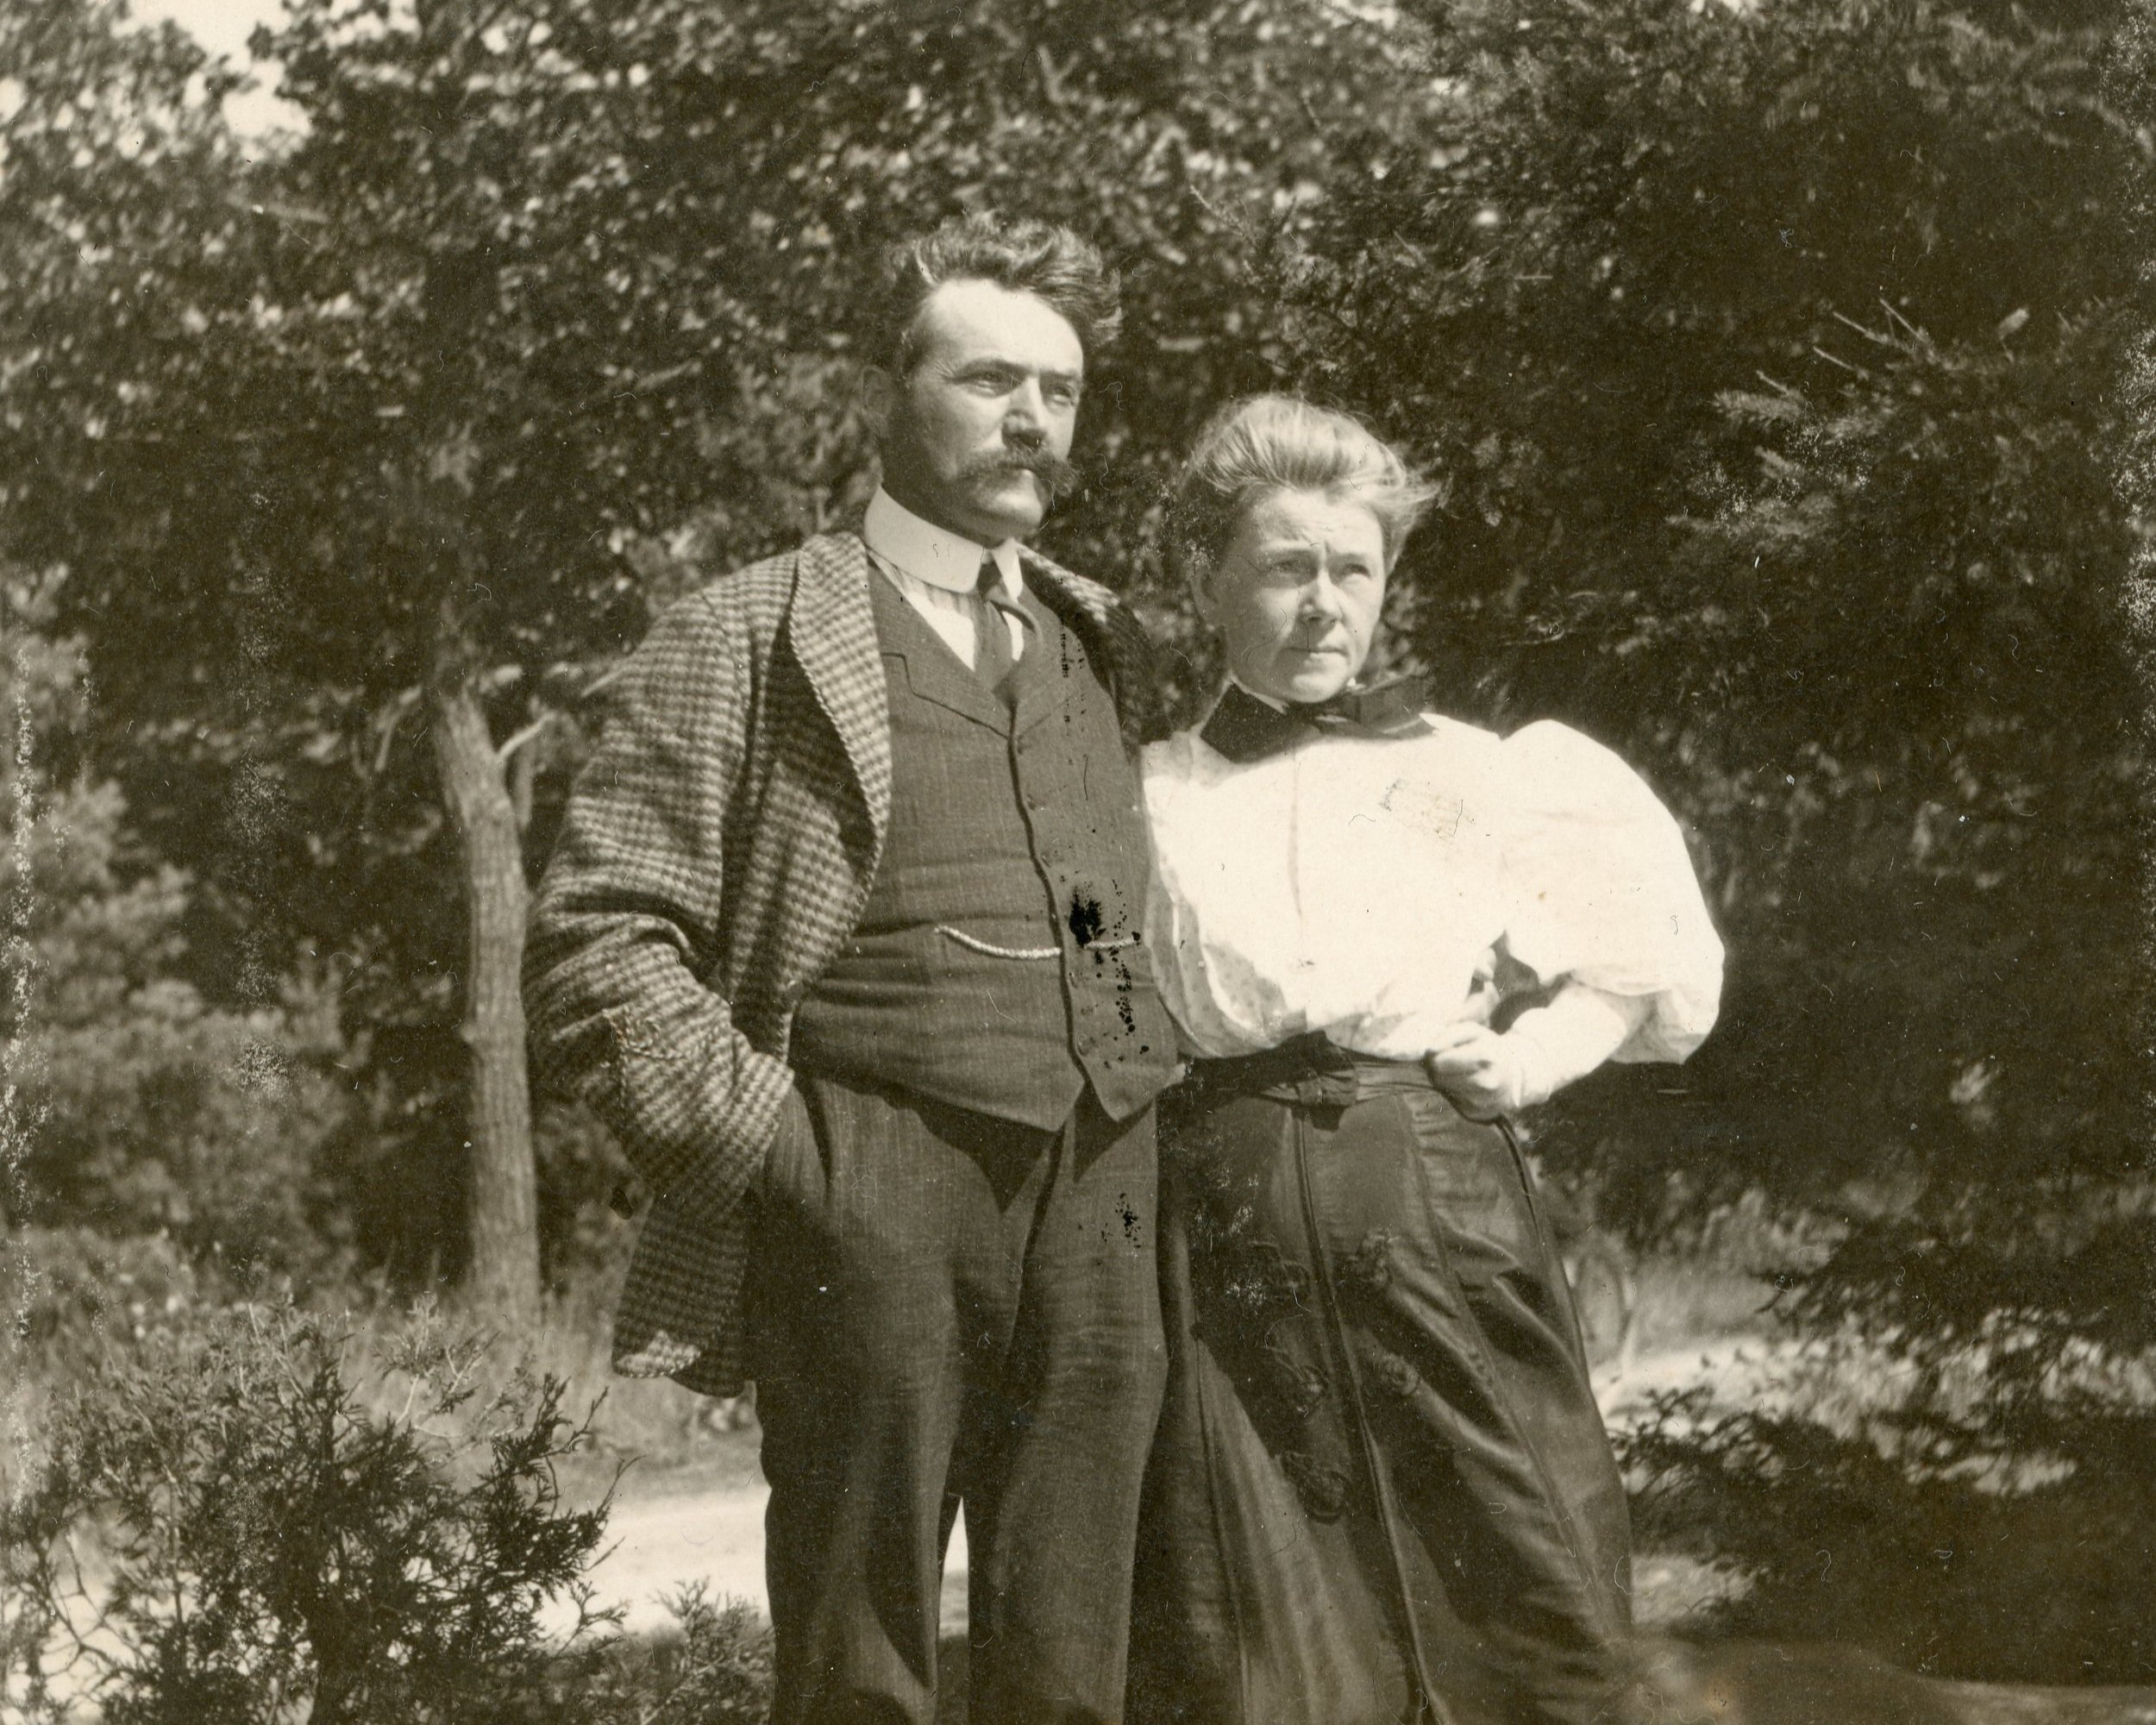 Thomas and Lillian Stewart